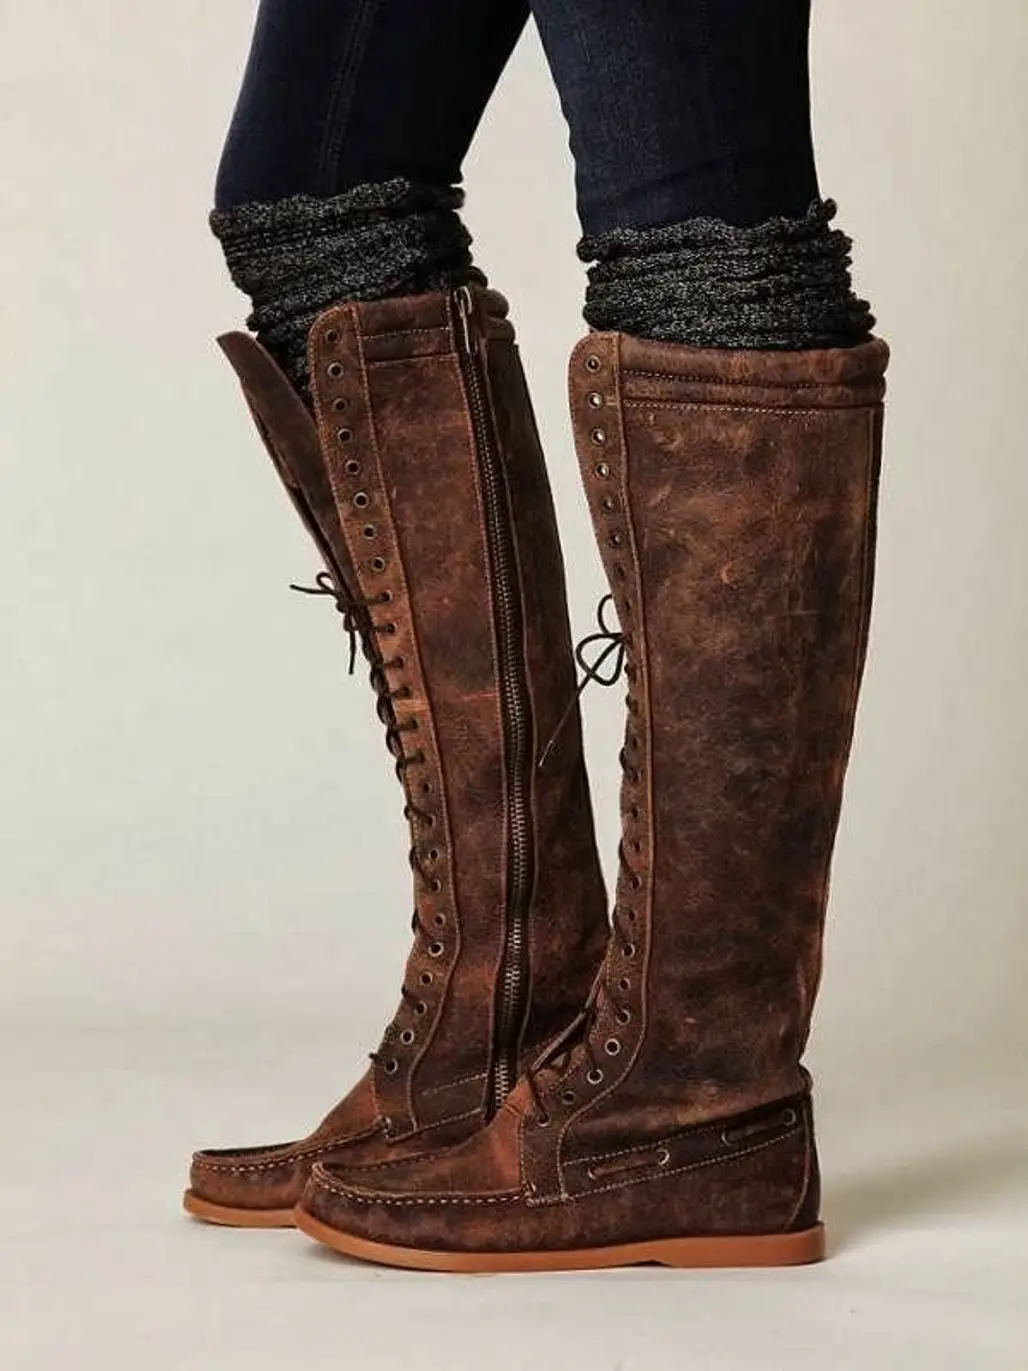 footwear,boot,riding boot,brown,leg,